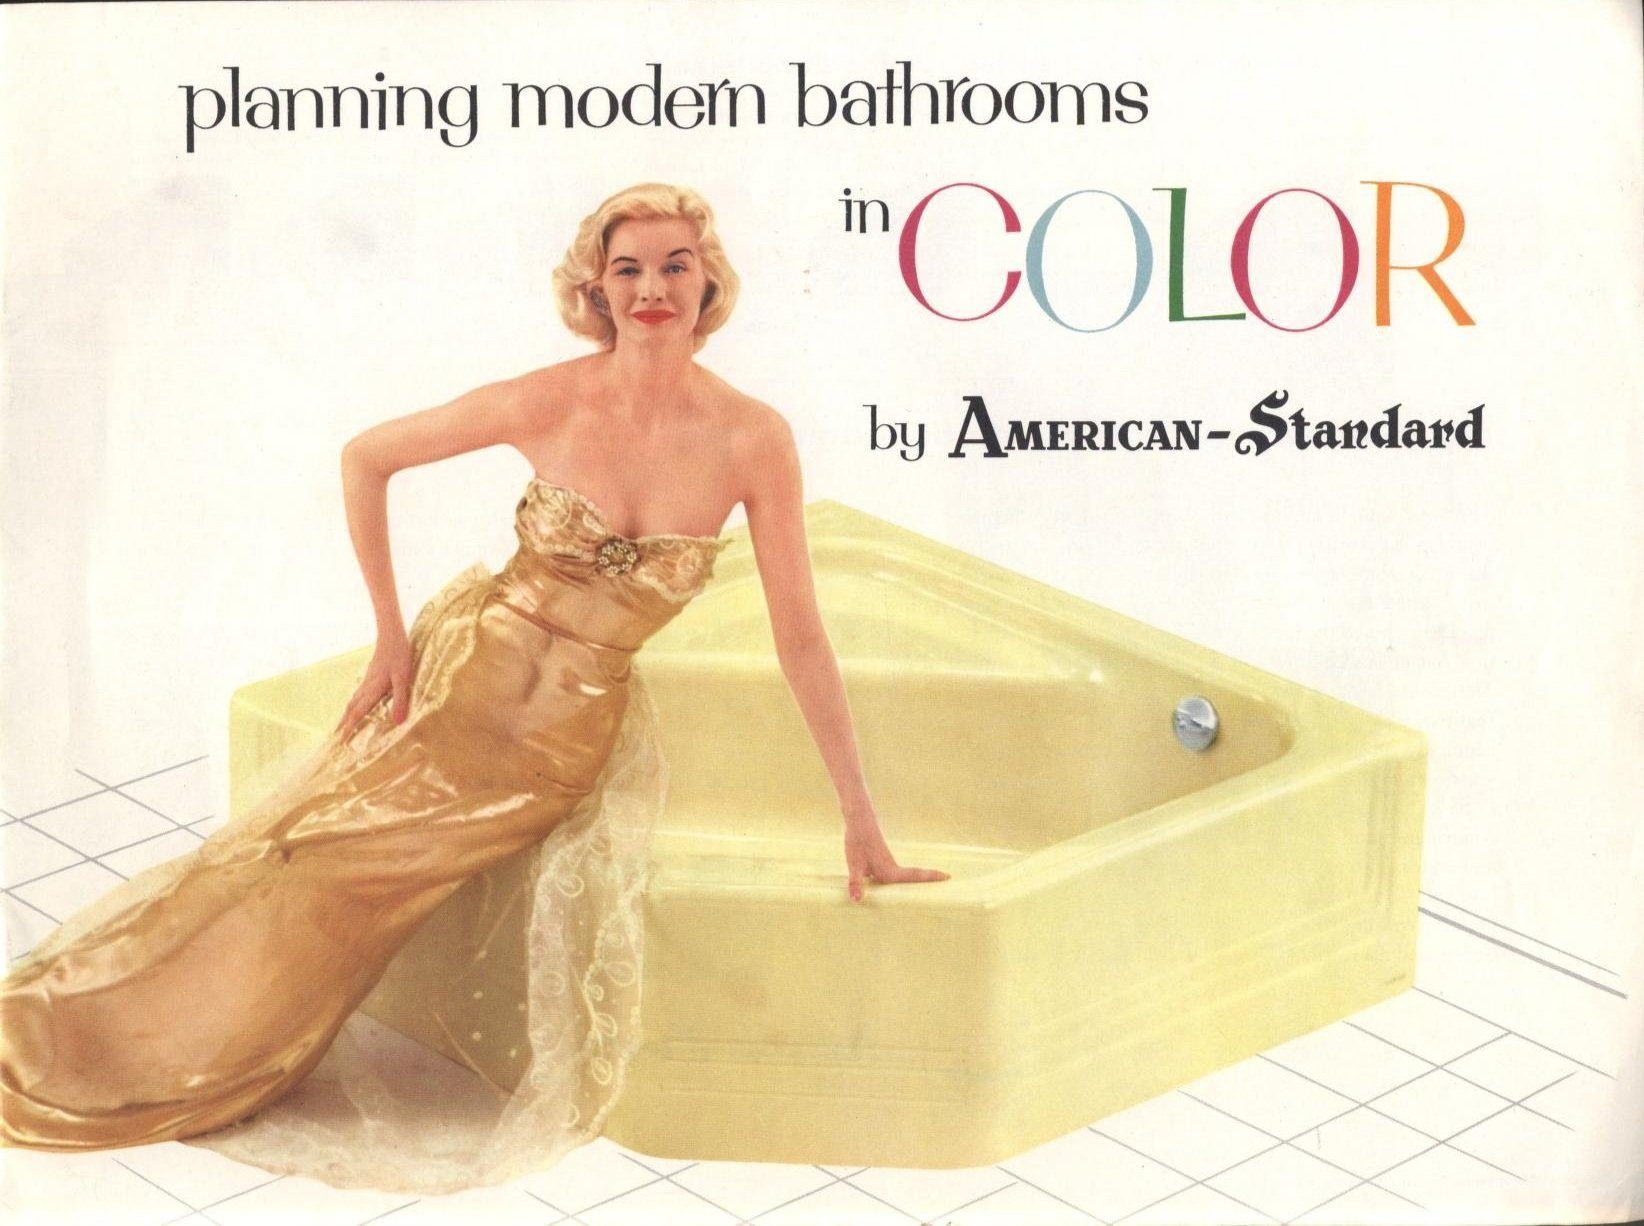 Planning Modern Bathroomsby American-Standard_0000.jpg